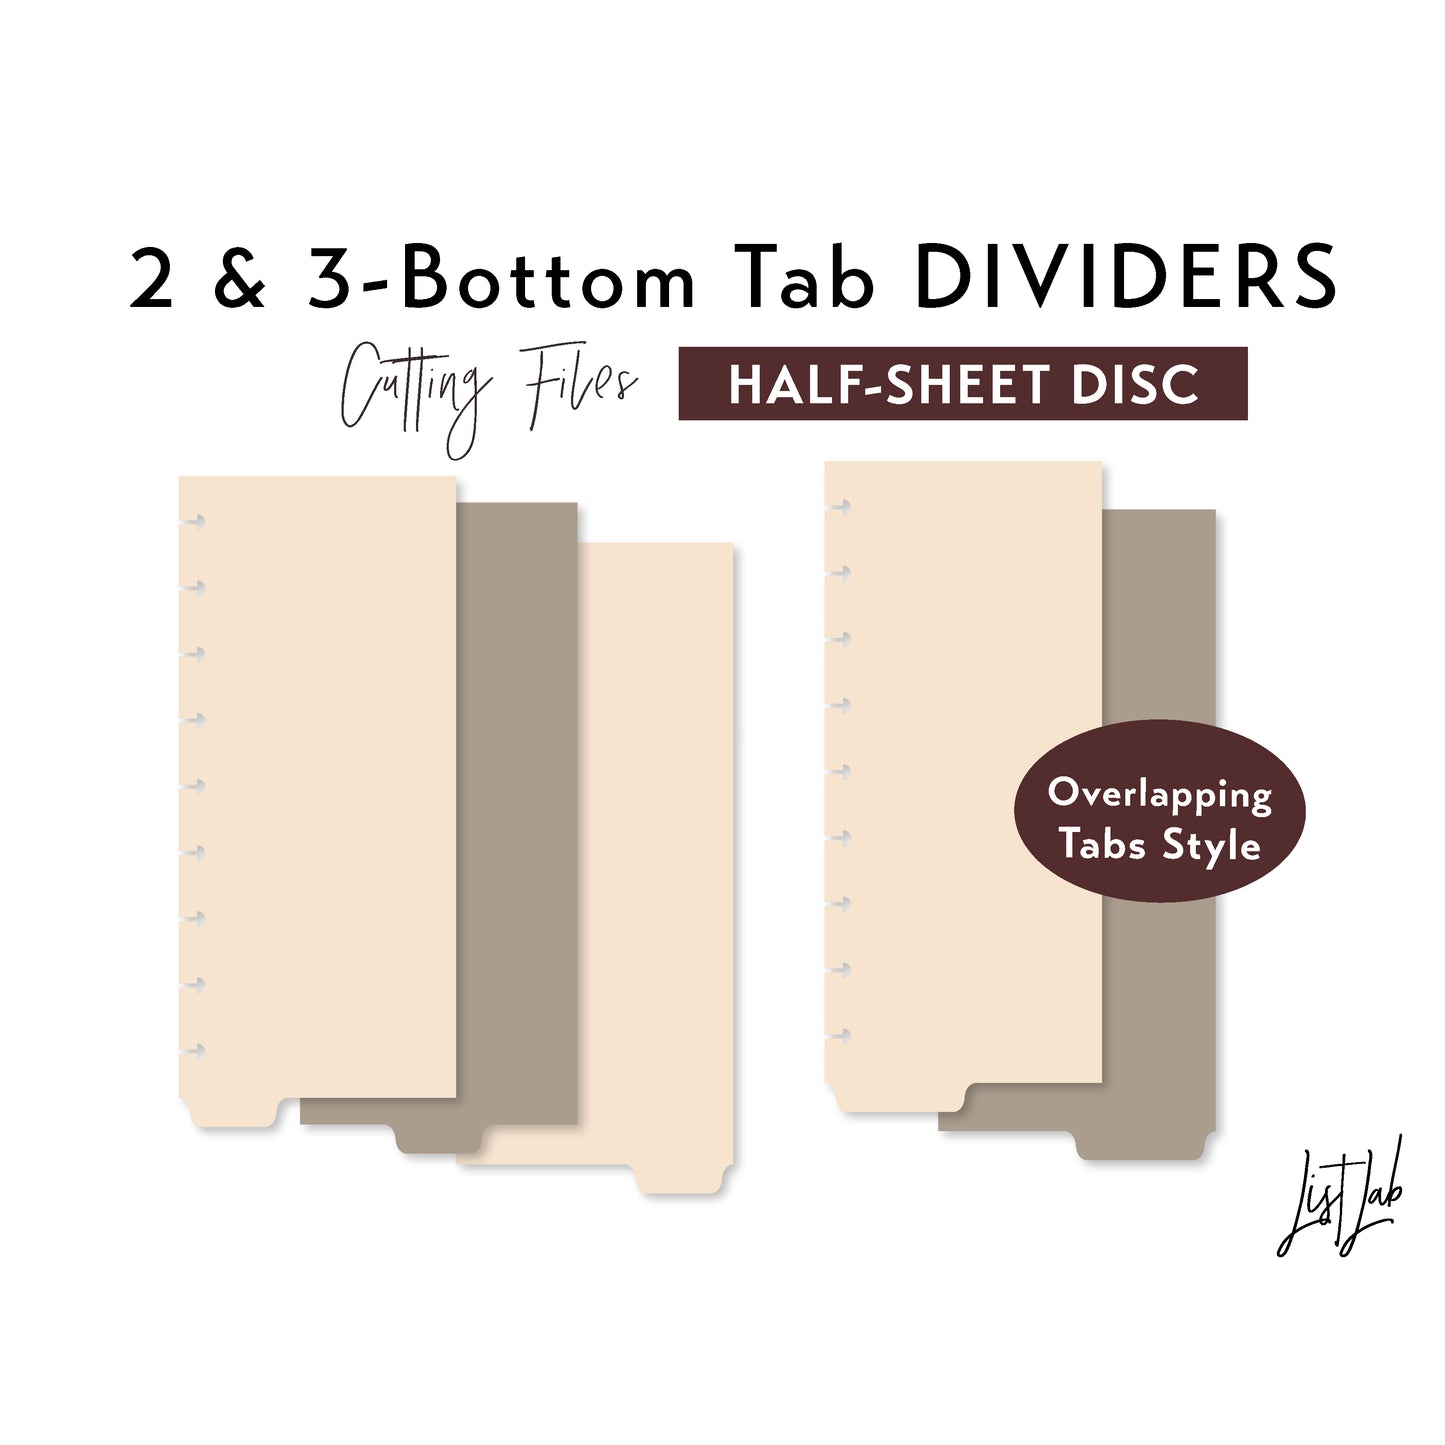 HALF-SHEET Disc 2 & 3-Bottom Tab Dividers Cutting Files Set